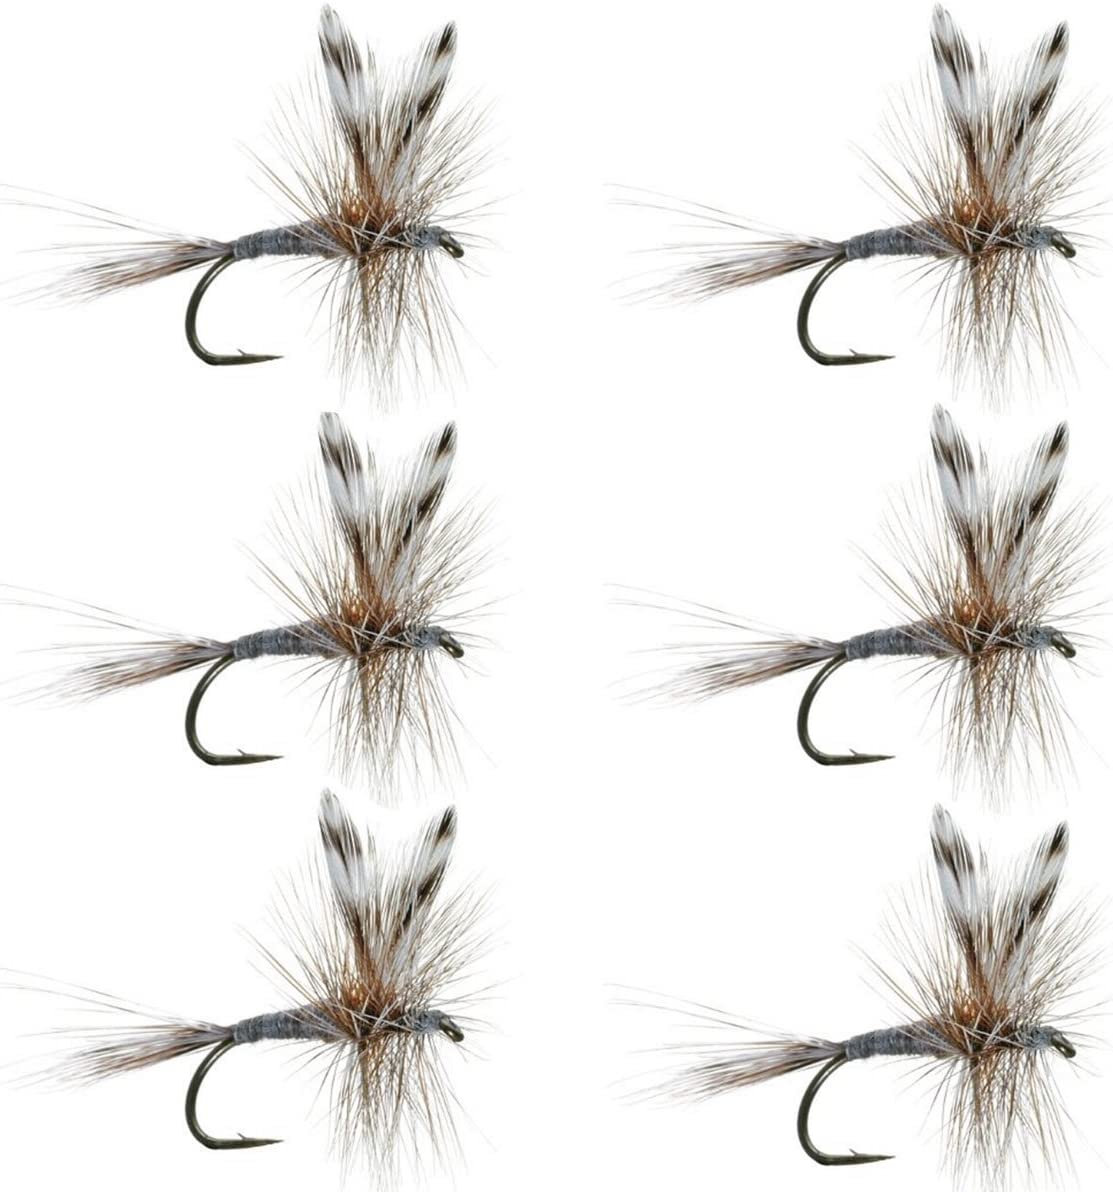 Adams Classic Dry Fly - Anzuelo para 6 moscas, tamaño 18